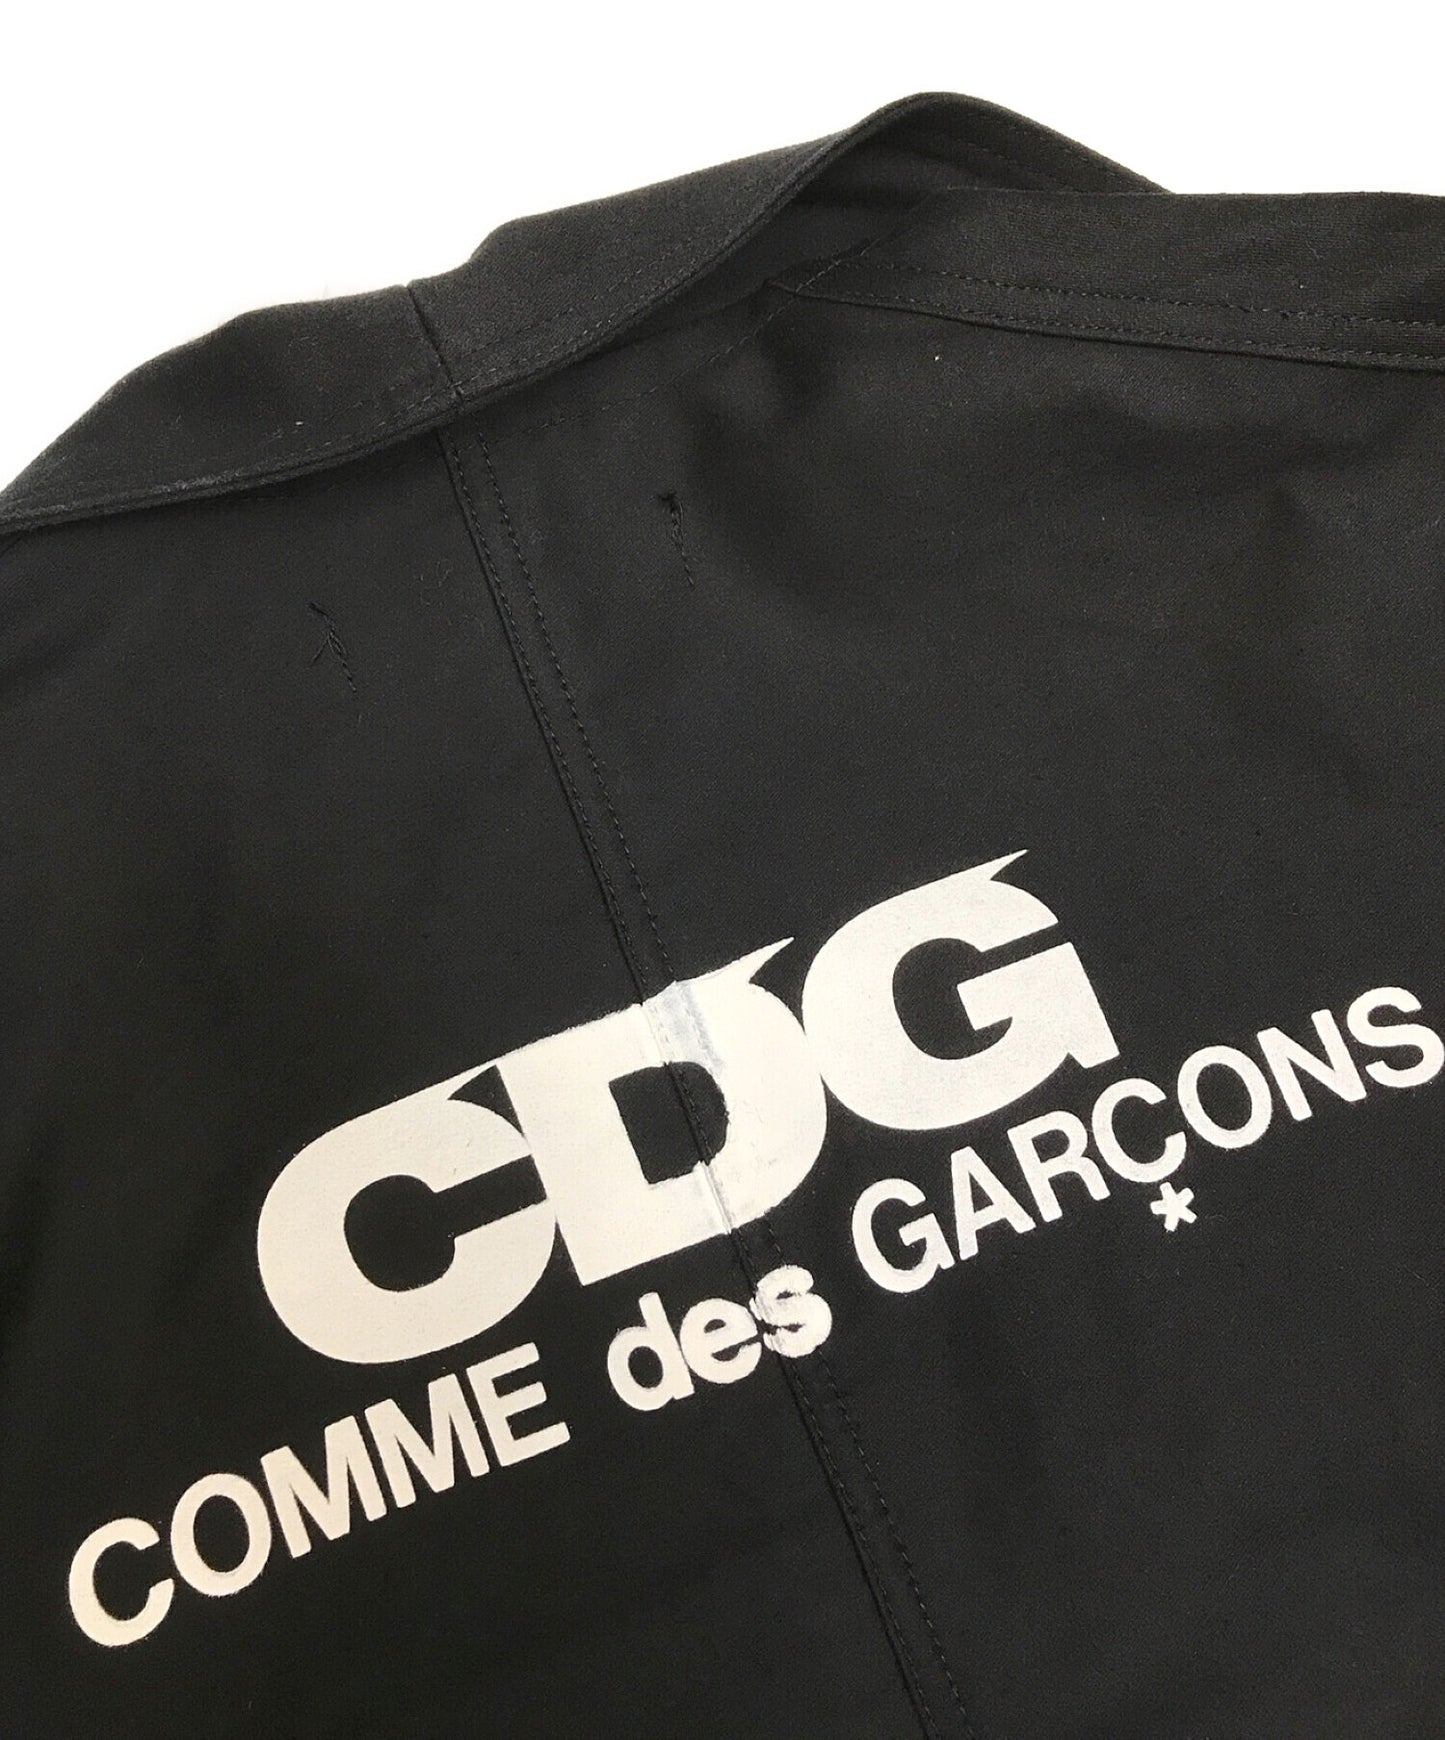 优质的设计商店Comme des Garcons×Le Laboureur合作背徽标工作外套IQ-J003